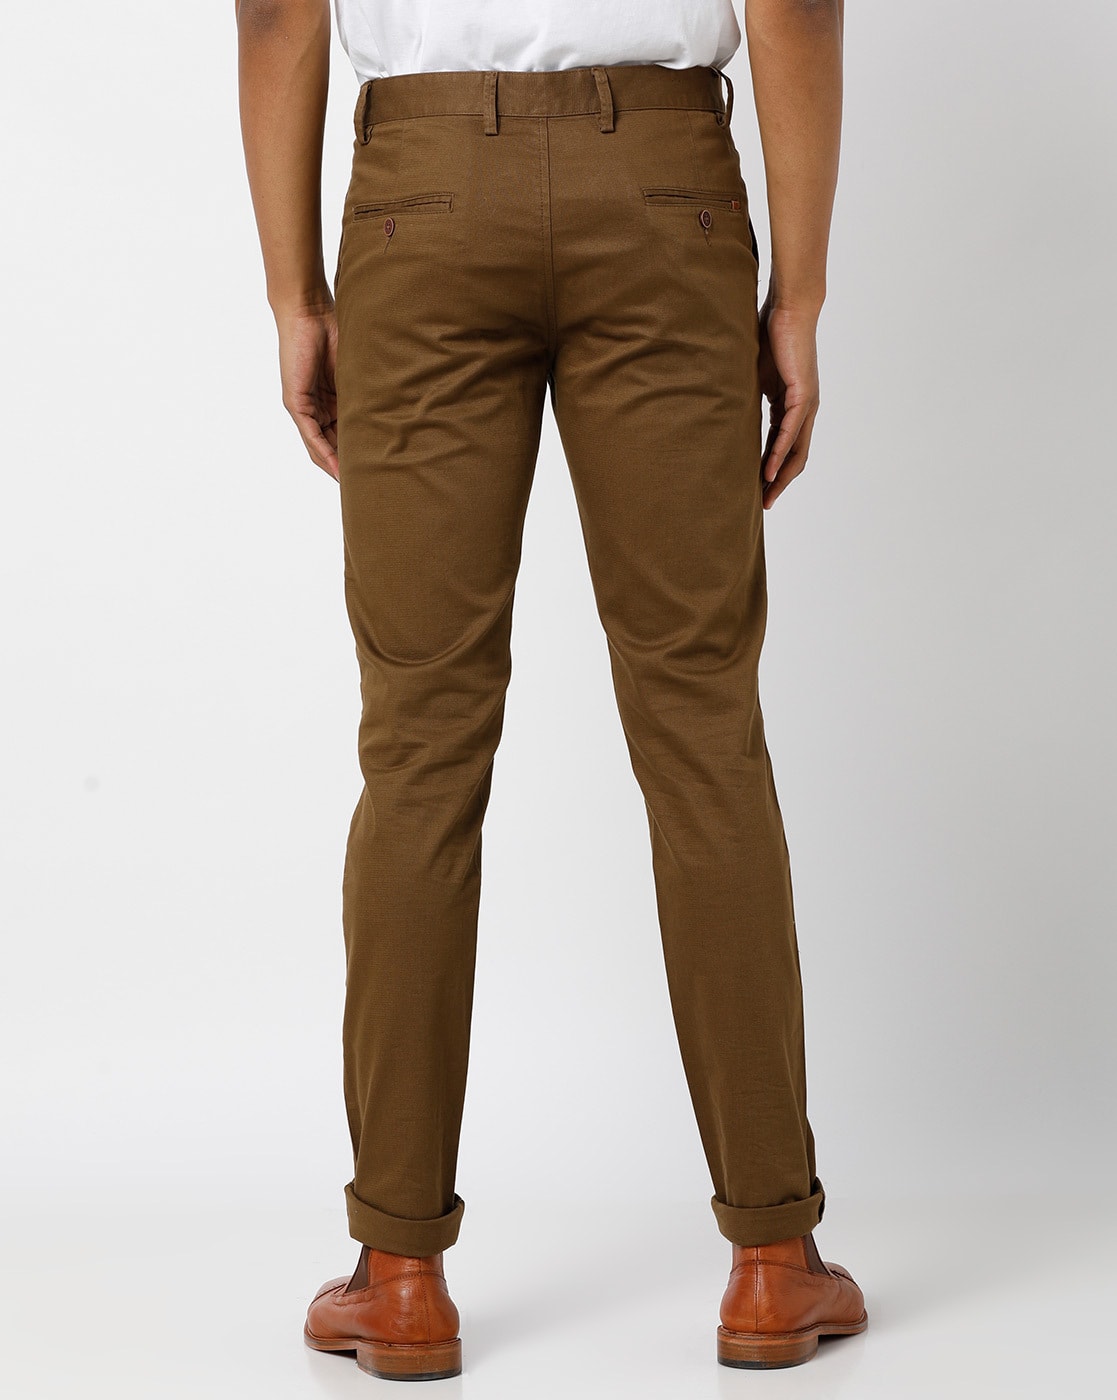 Buy Grey Trousers  Pants for Men by TURTLE Online  Ajiocom